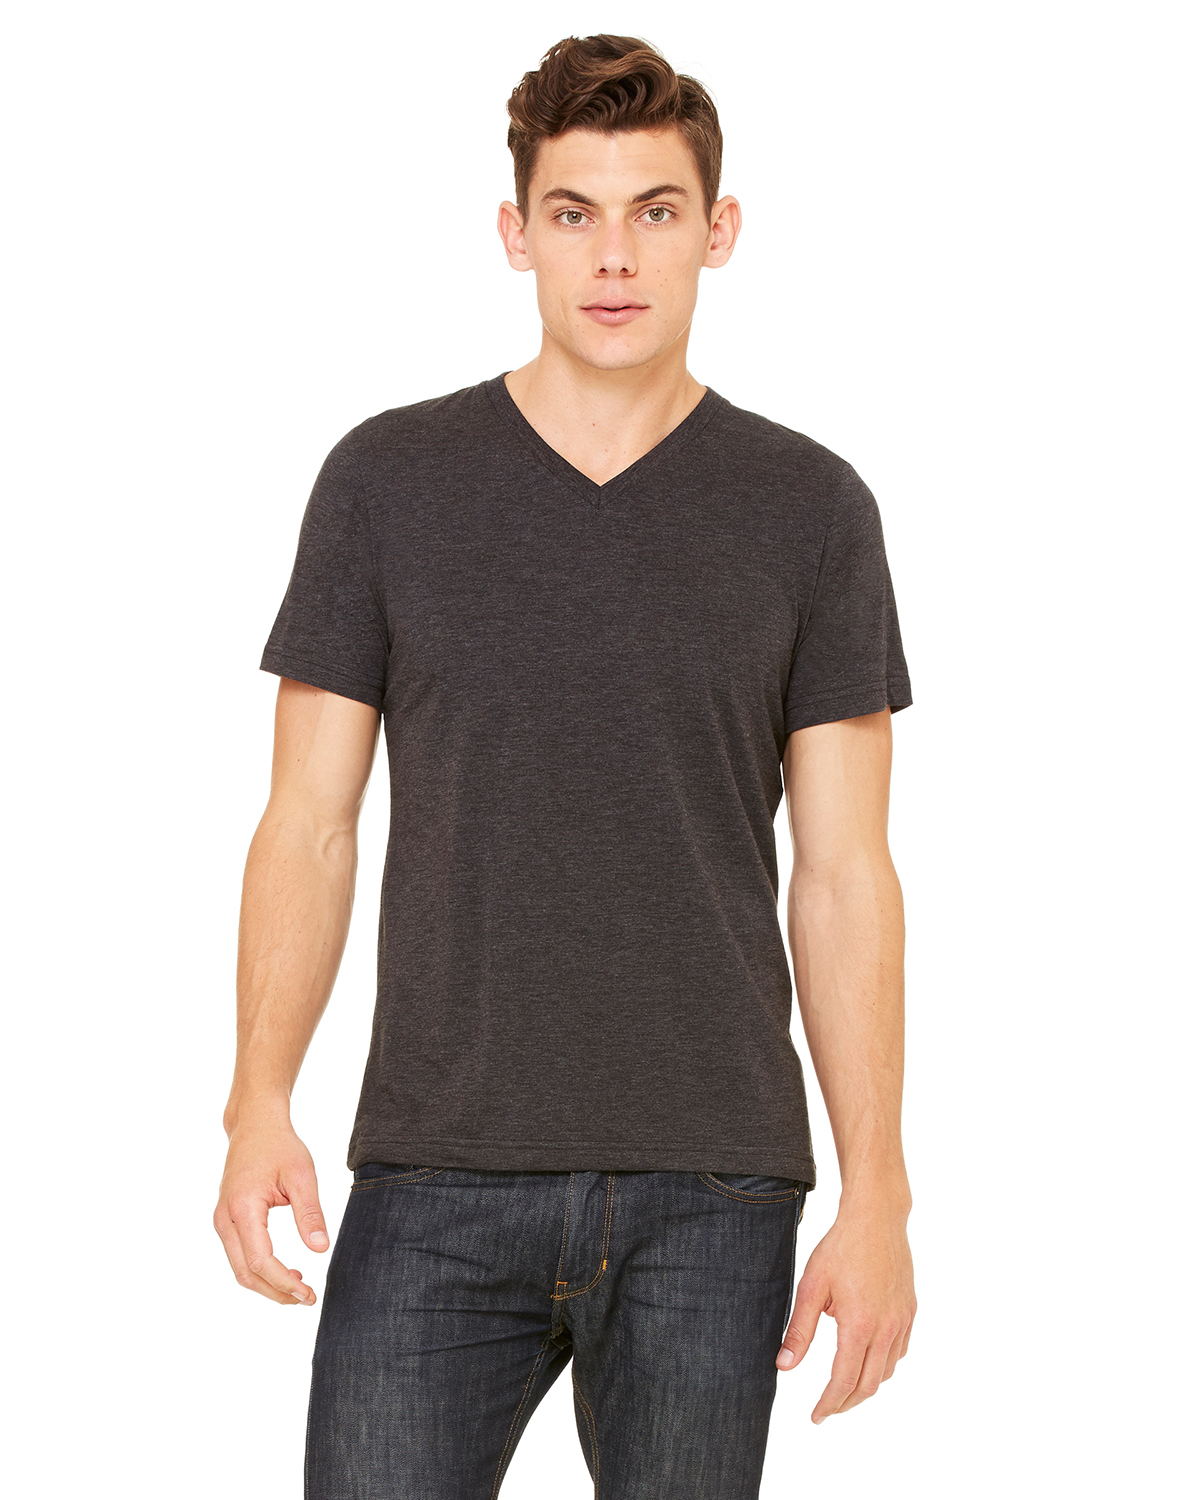 Bella 3415C - Unisex Triblend Short-Sleeve V-Neck T-Shirt